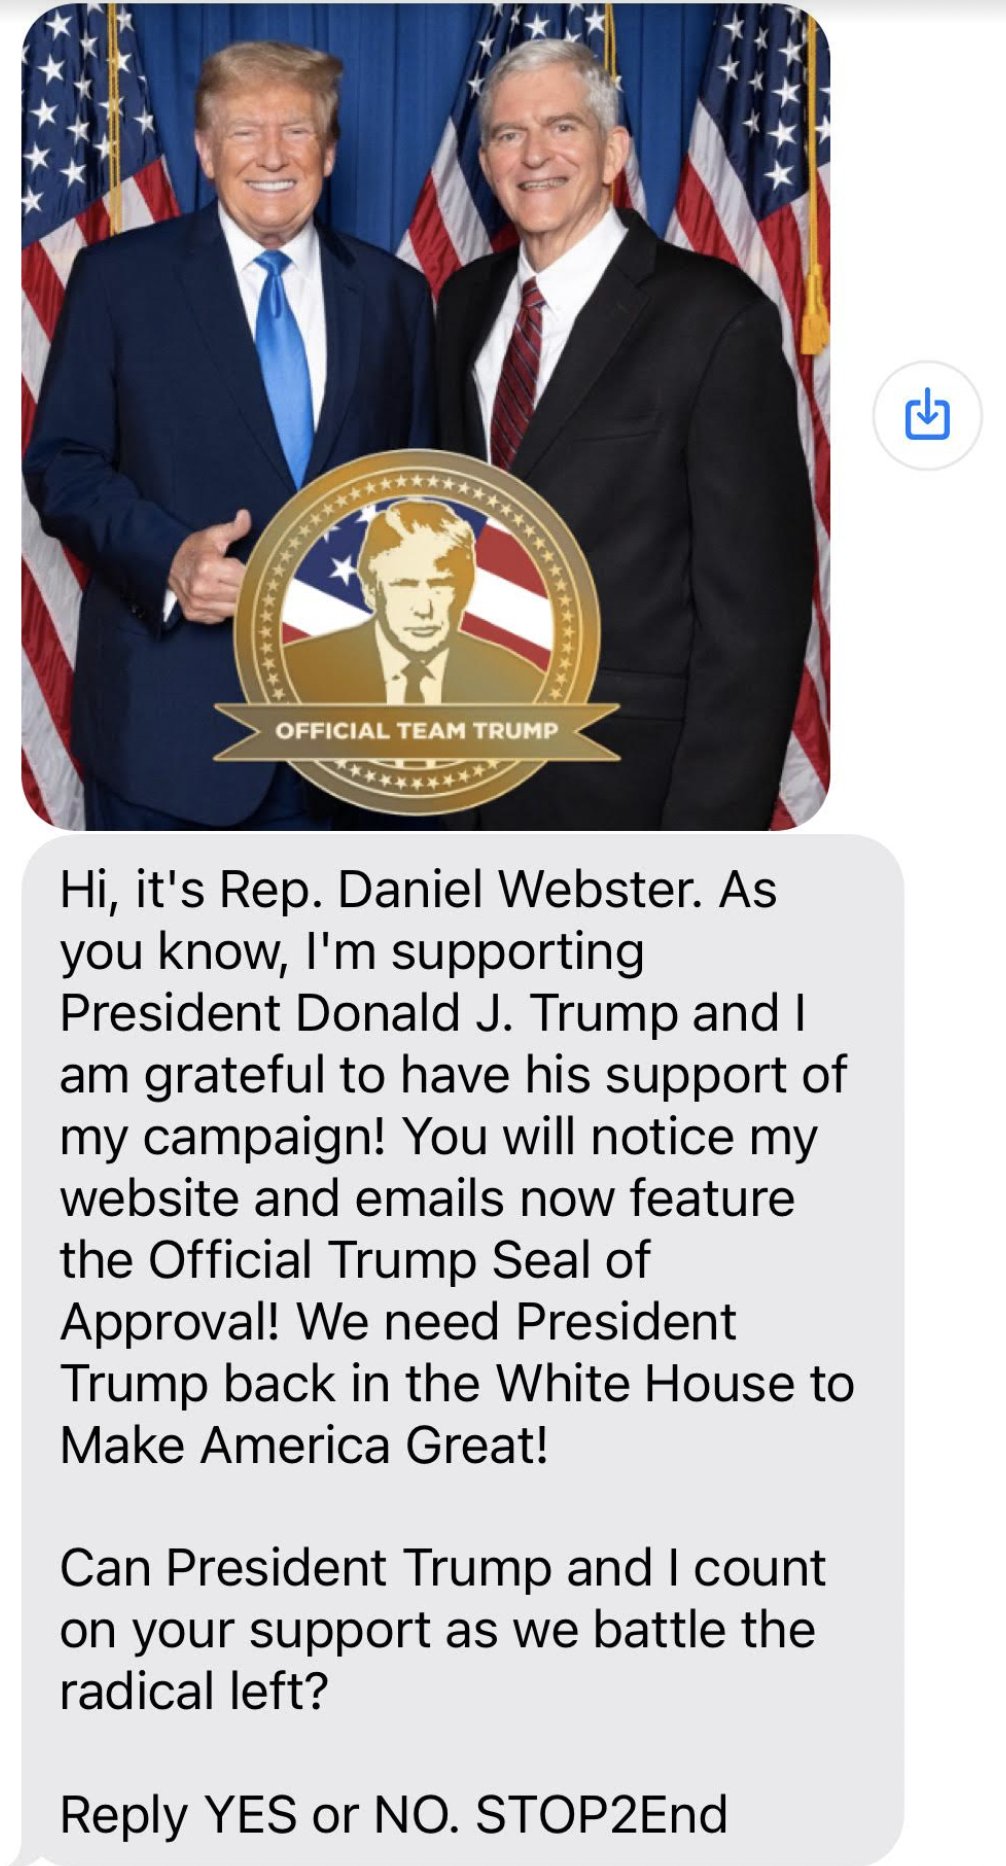 Rep. Daniel Webster/ President Donald Trump